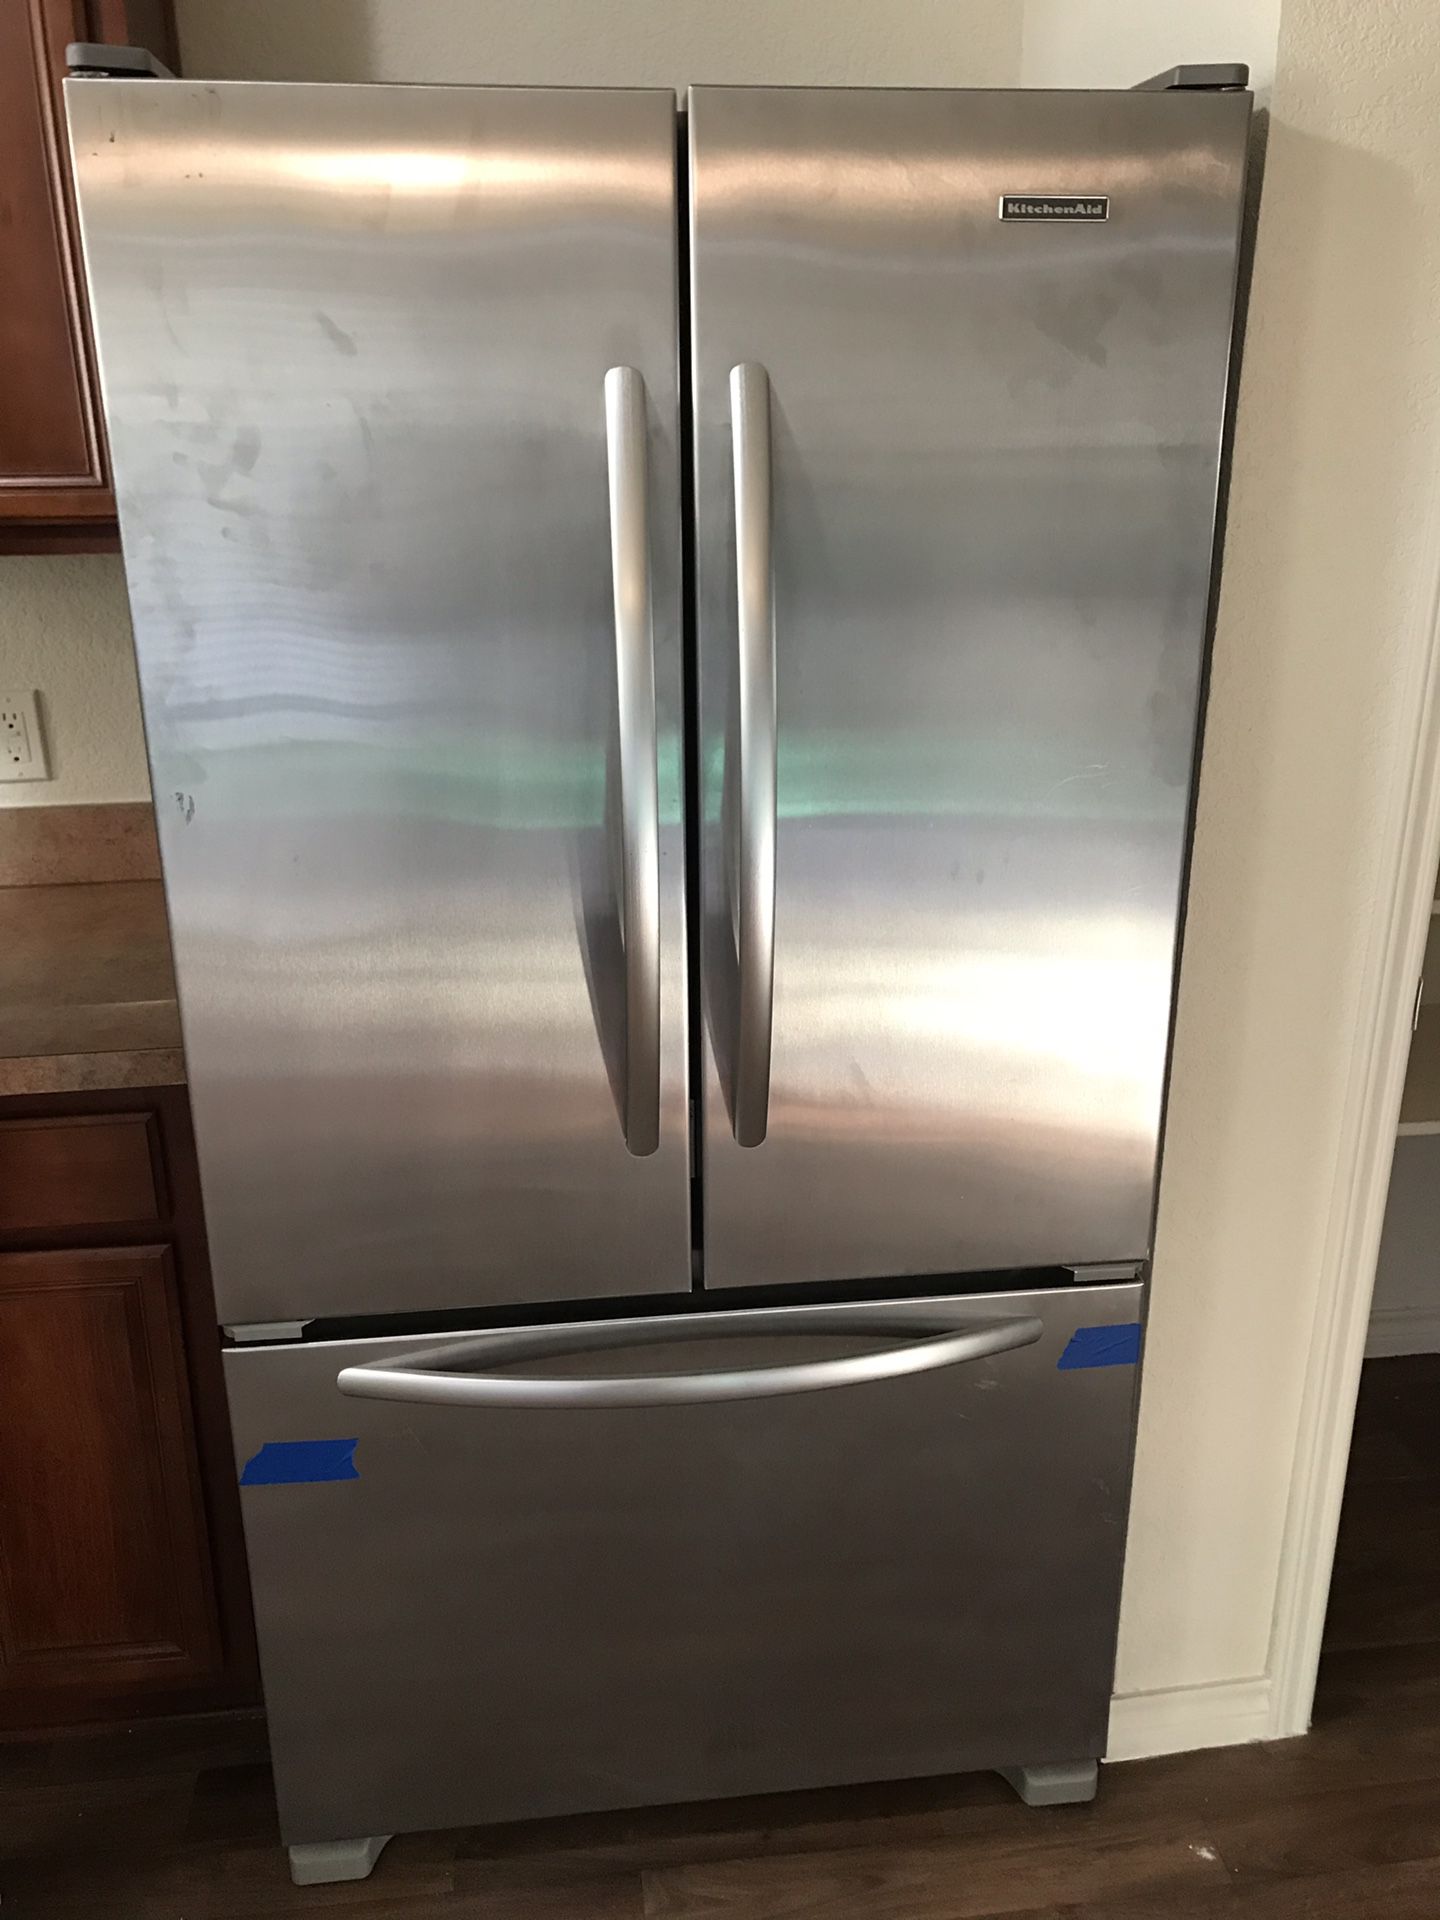 Kitchenaid refrigerator